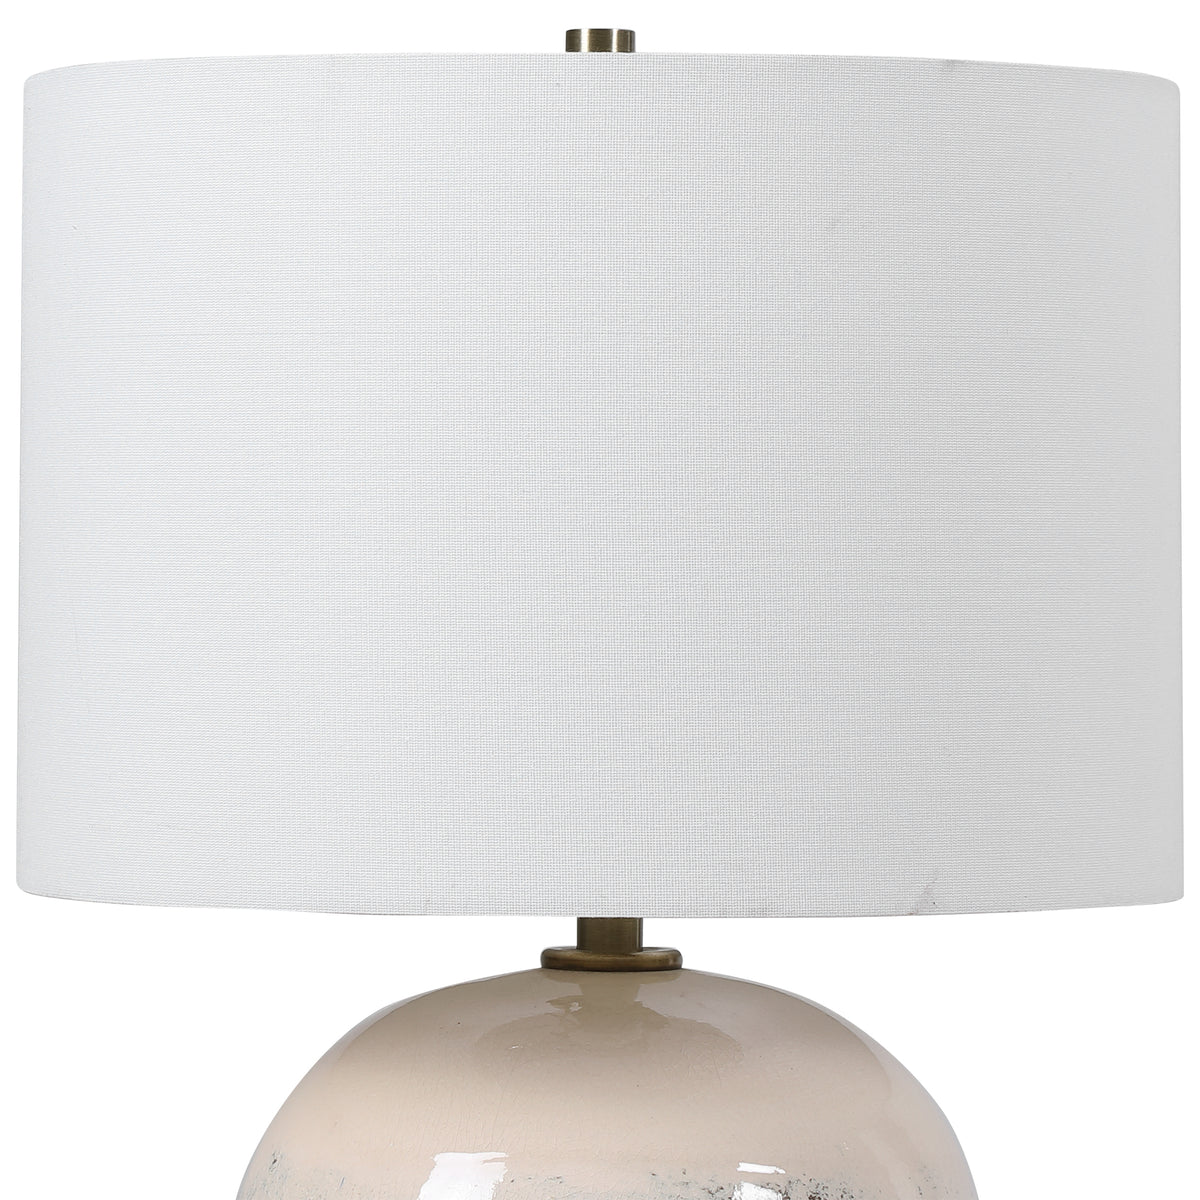 Durango Terracotta Accent Lamp